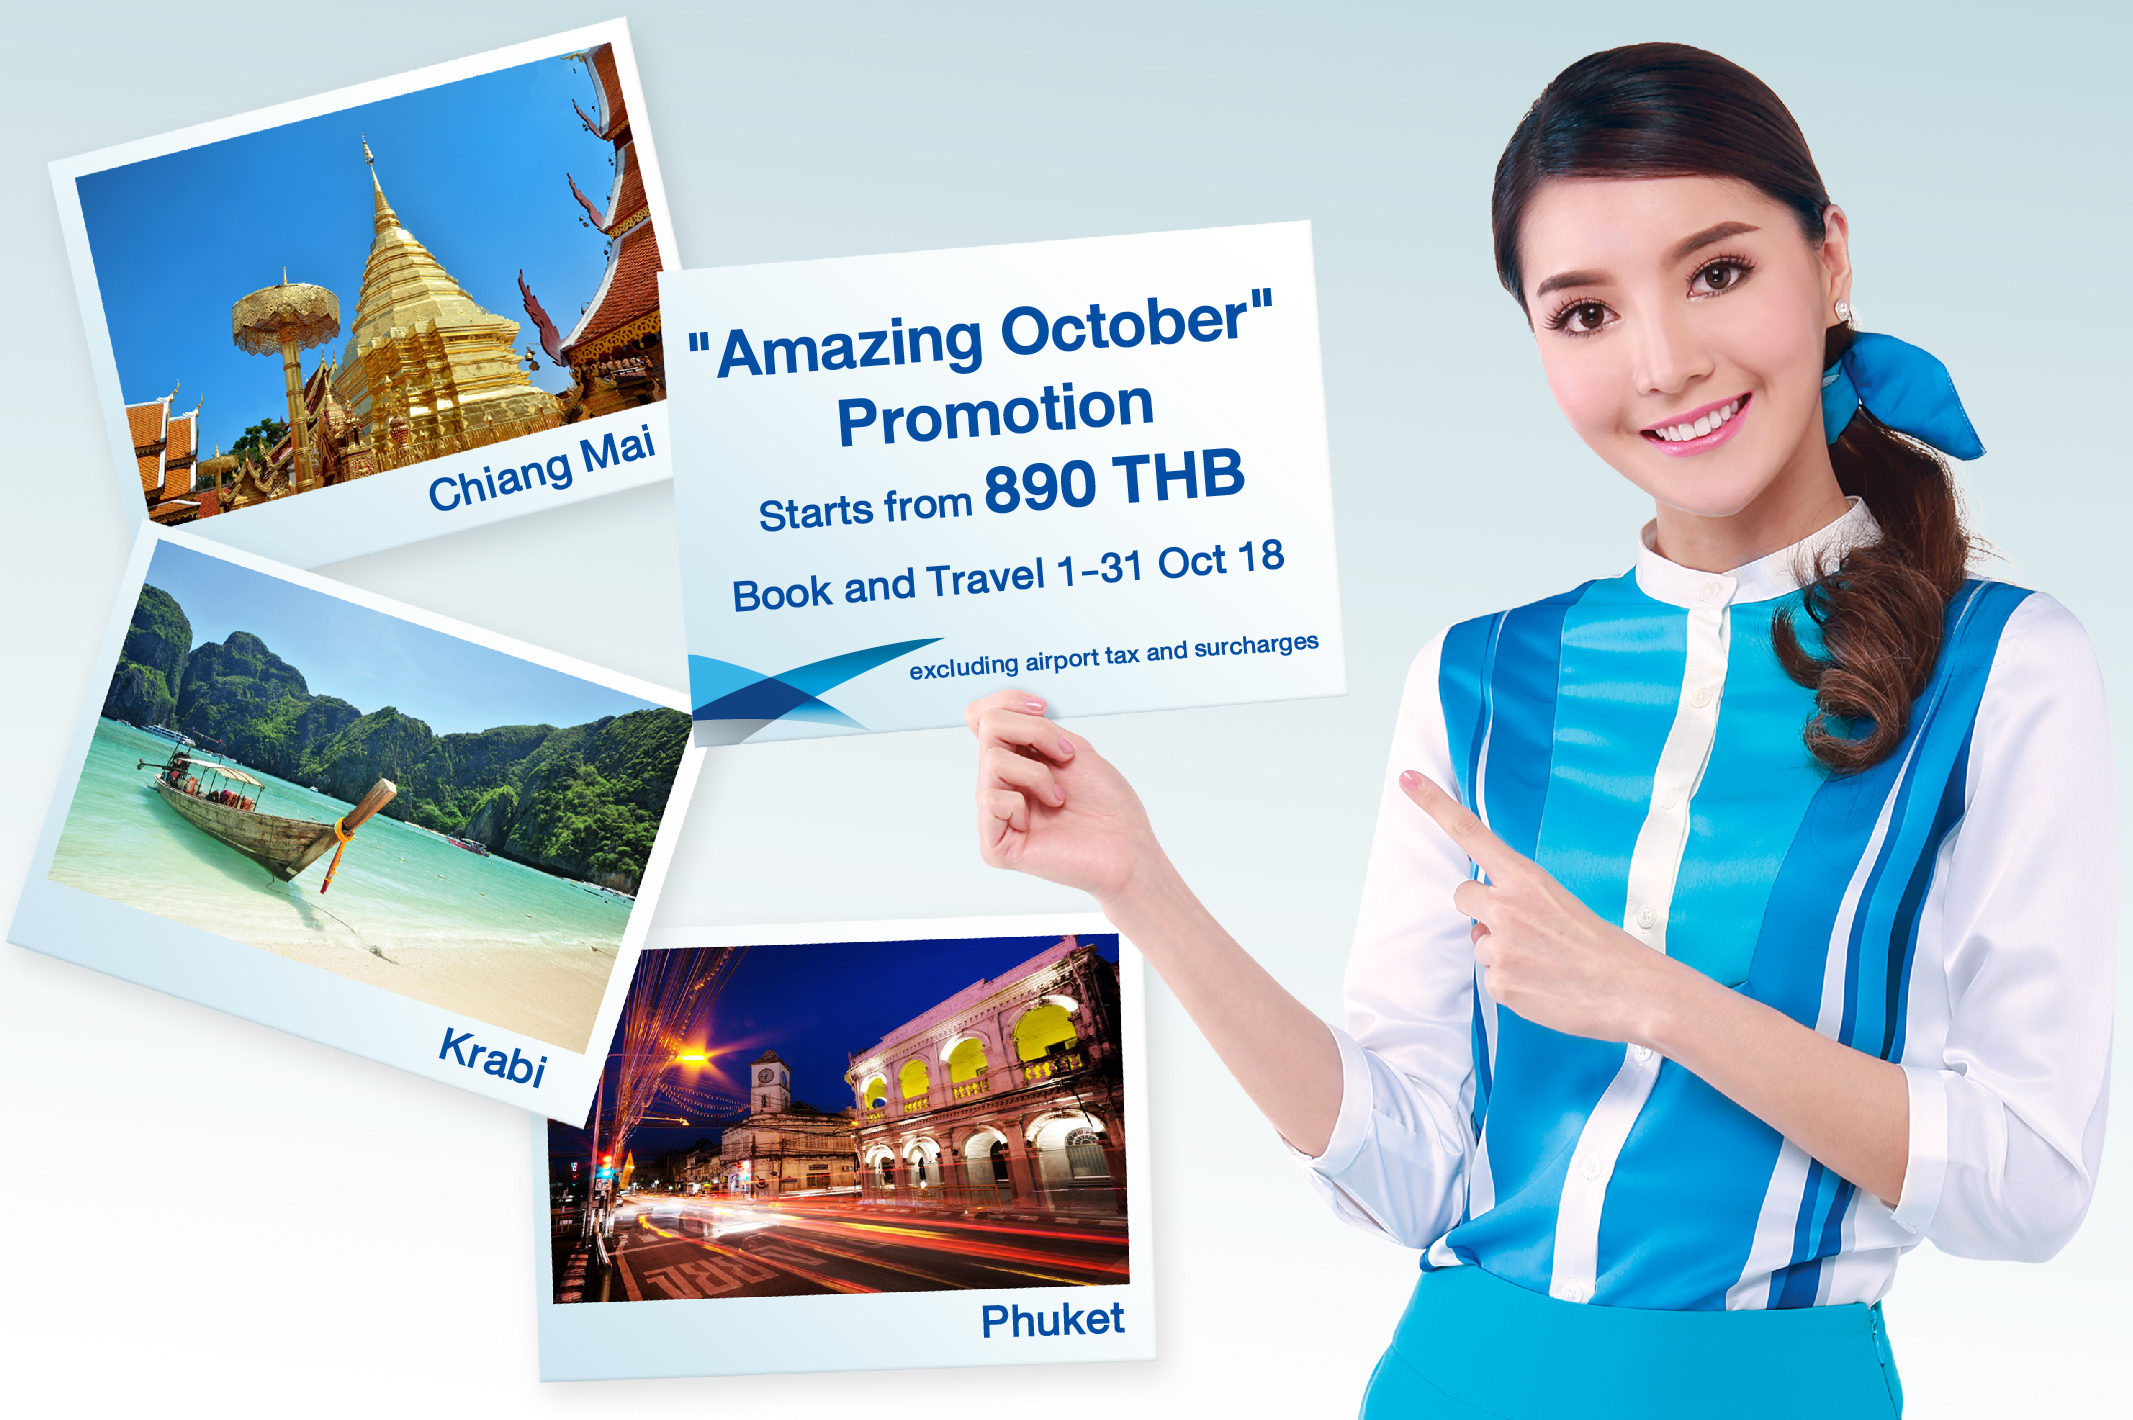 bangkok air ตั๋วเครื่องบิน 890 บาท บางกอกแอร์เวย์ส โปร amazing October